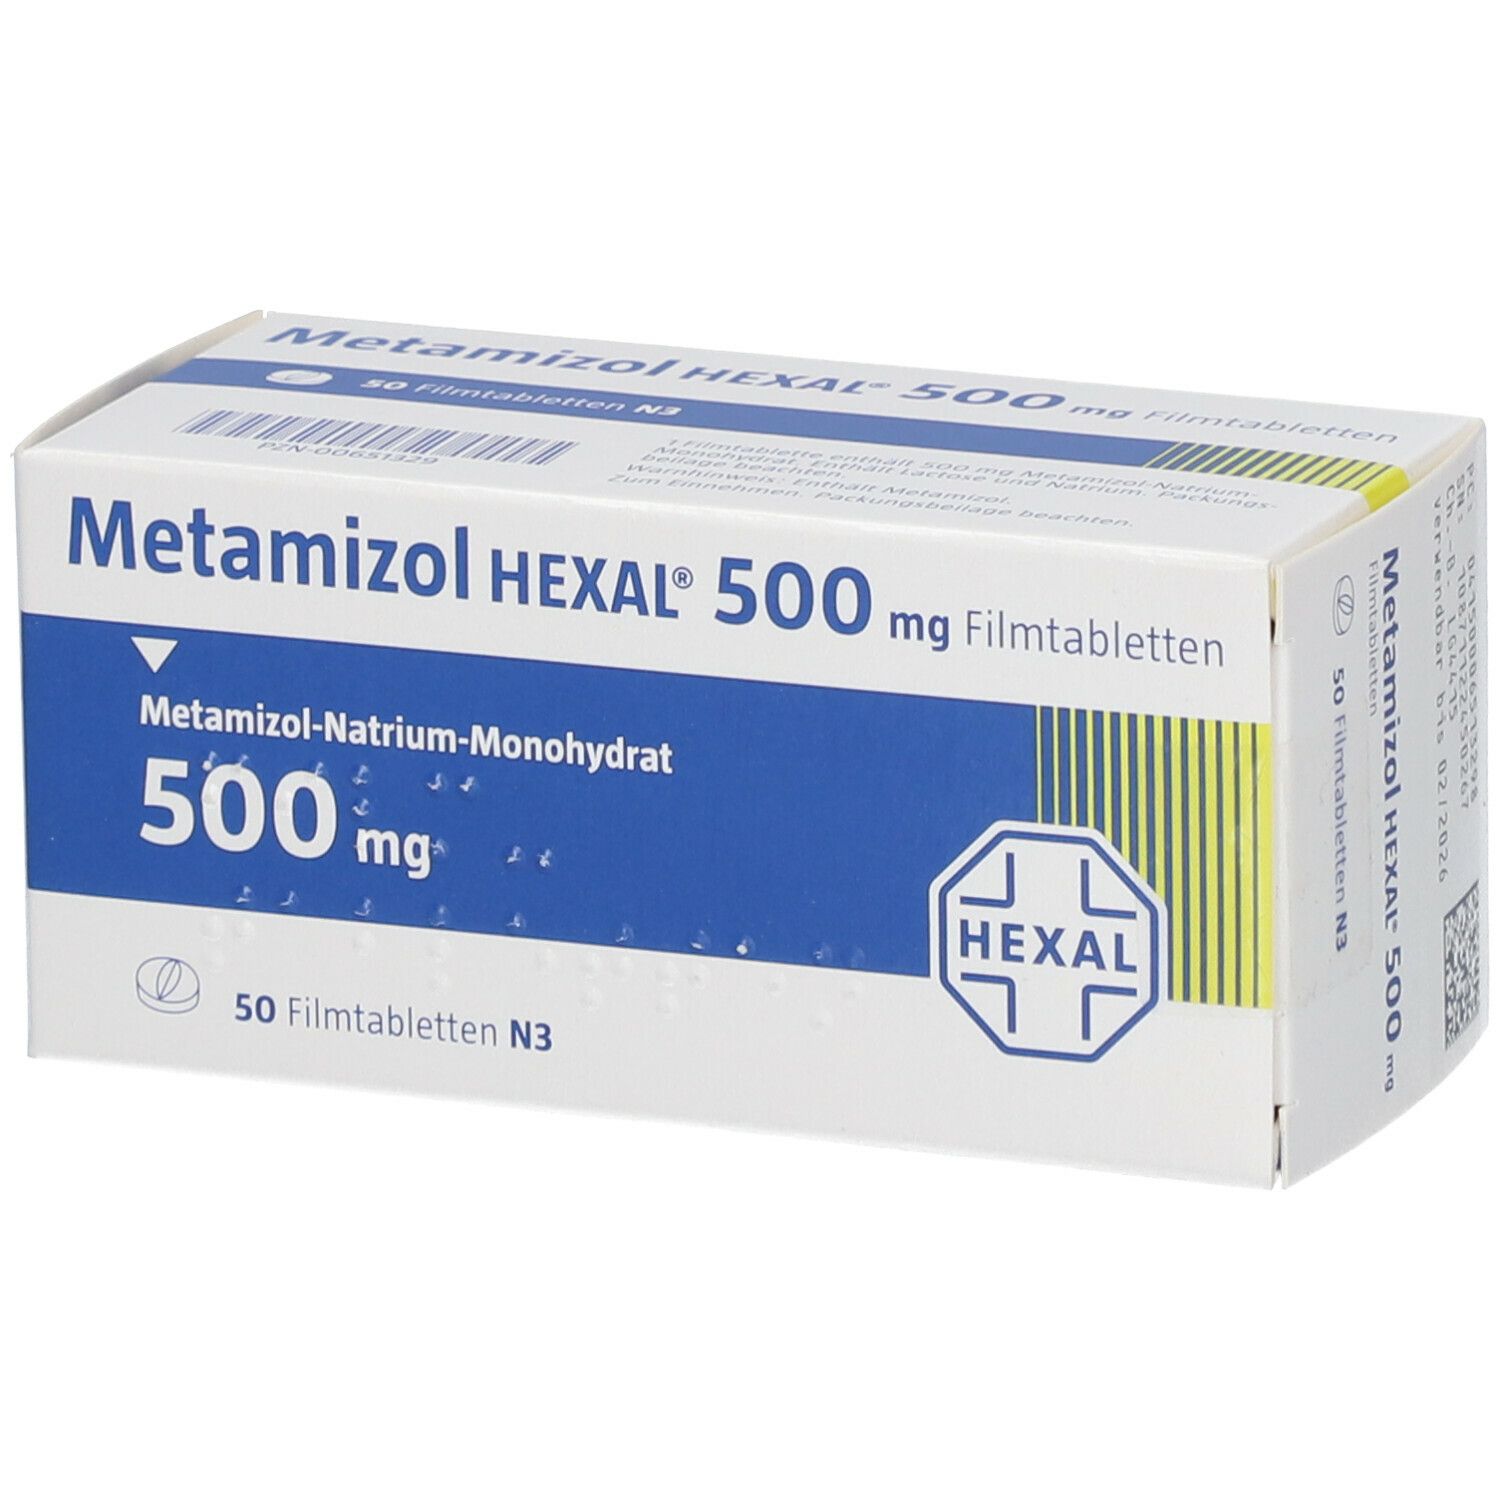 Metamizol HEXAL® 500 mg